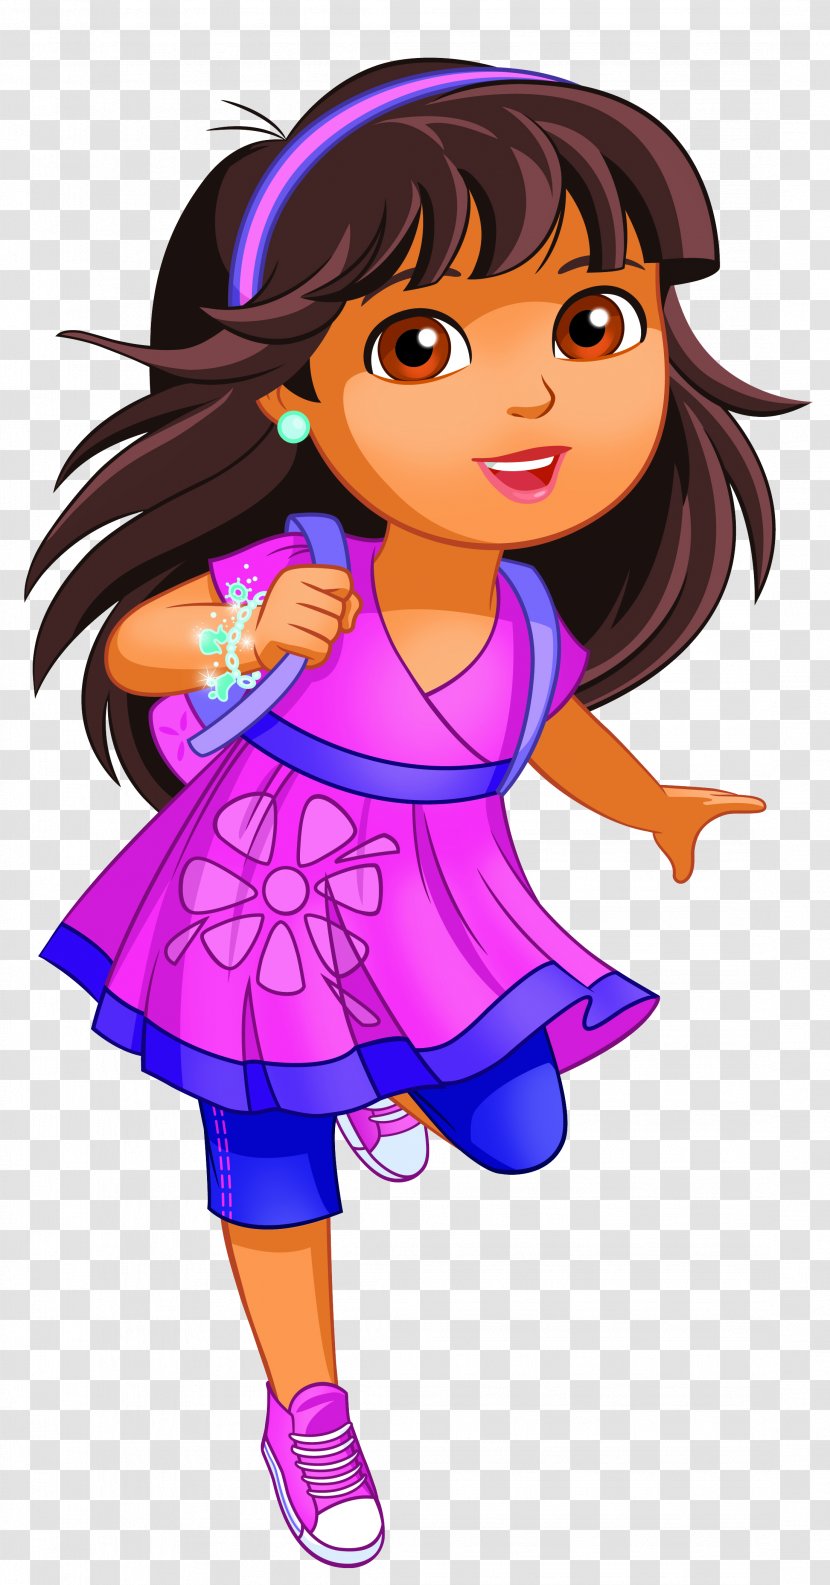 Dora The Explorer Nick Jr. Nickelodeon Cartoon Clip Art - Silhouette - Image Transparent PNG